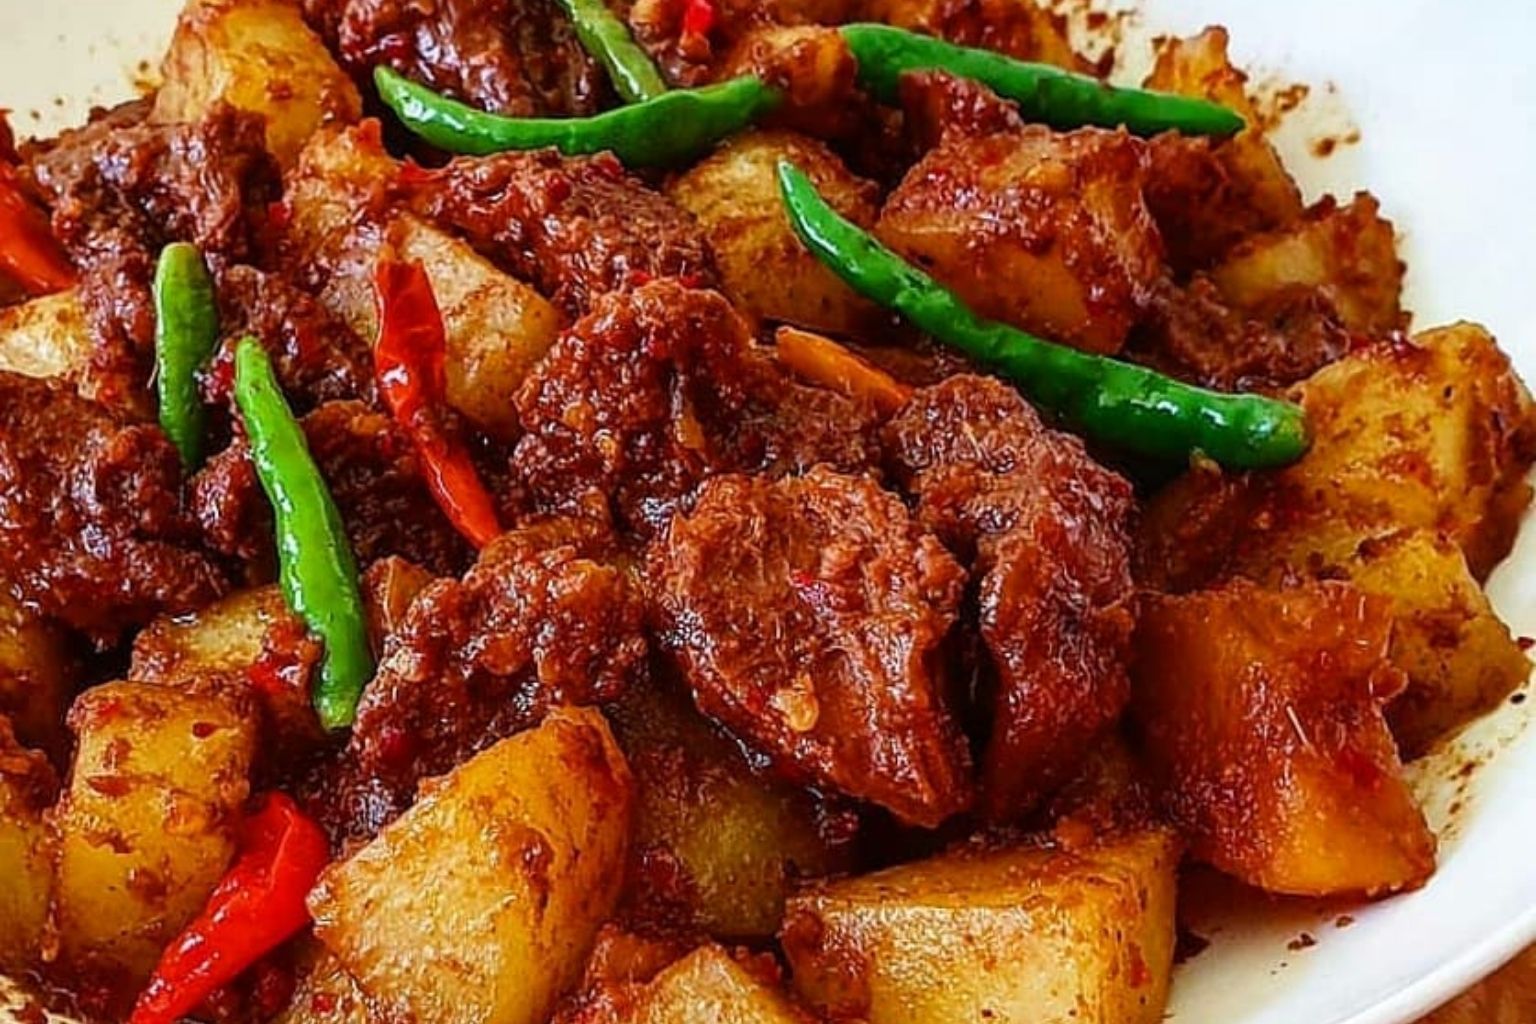 Resep dan cara membuat daging sapi tumis kentang cabai hijau.